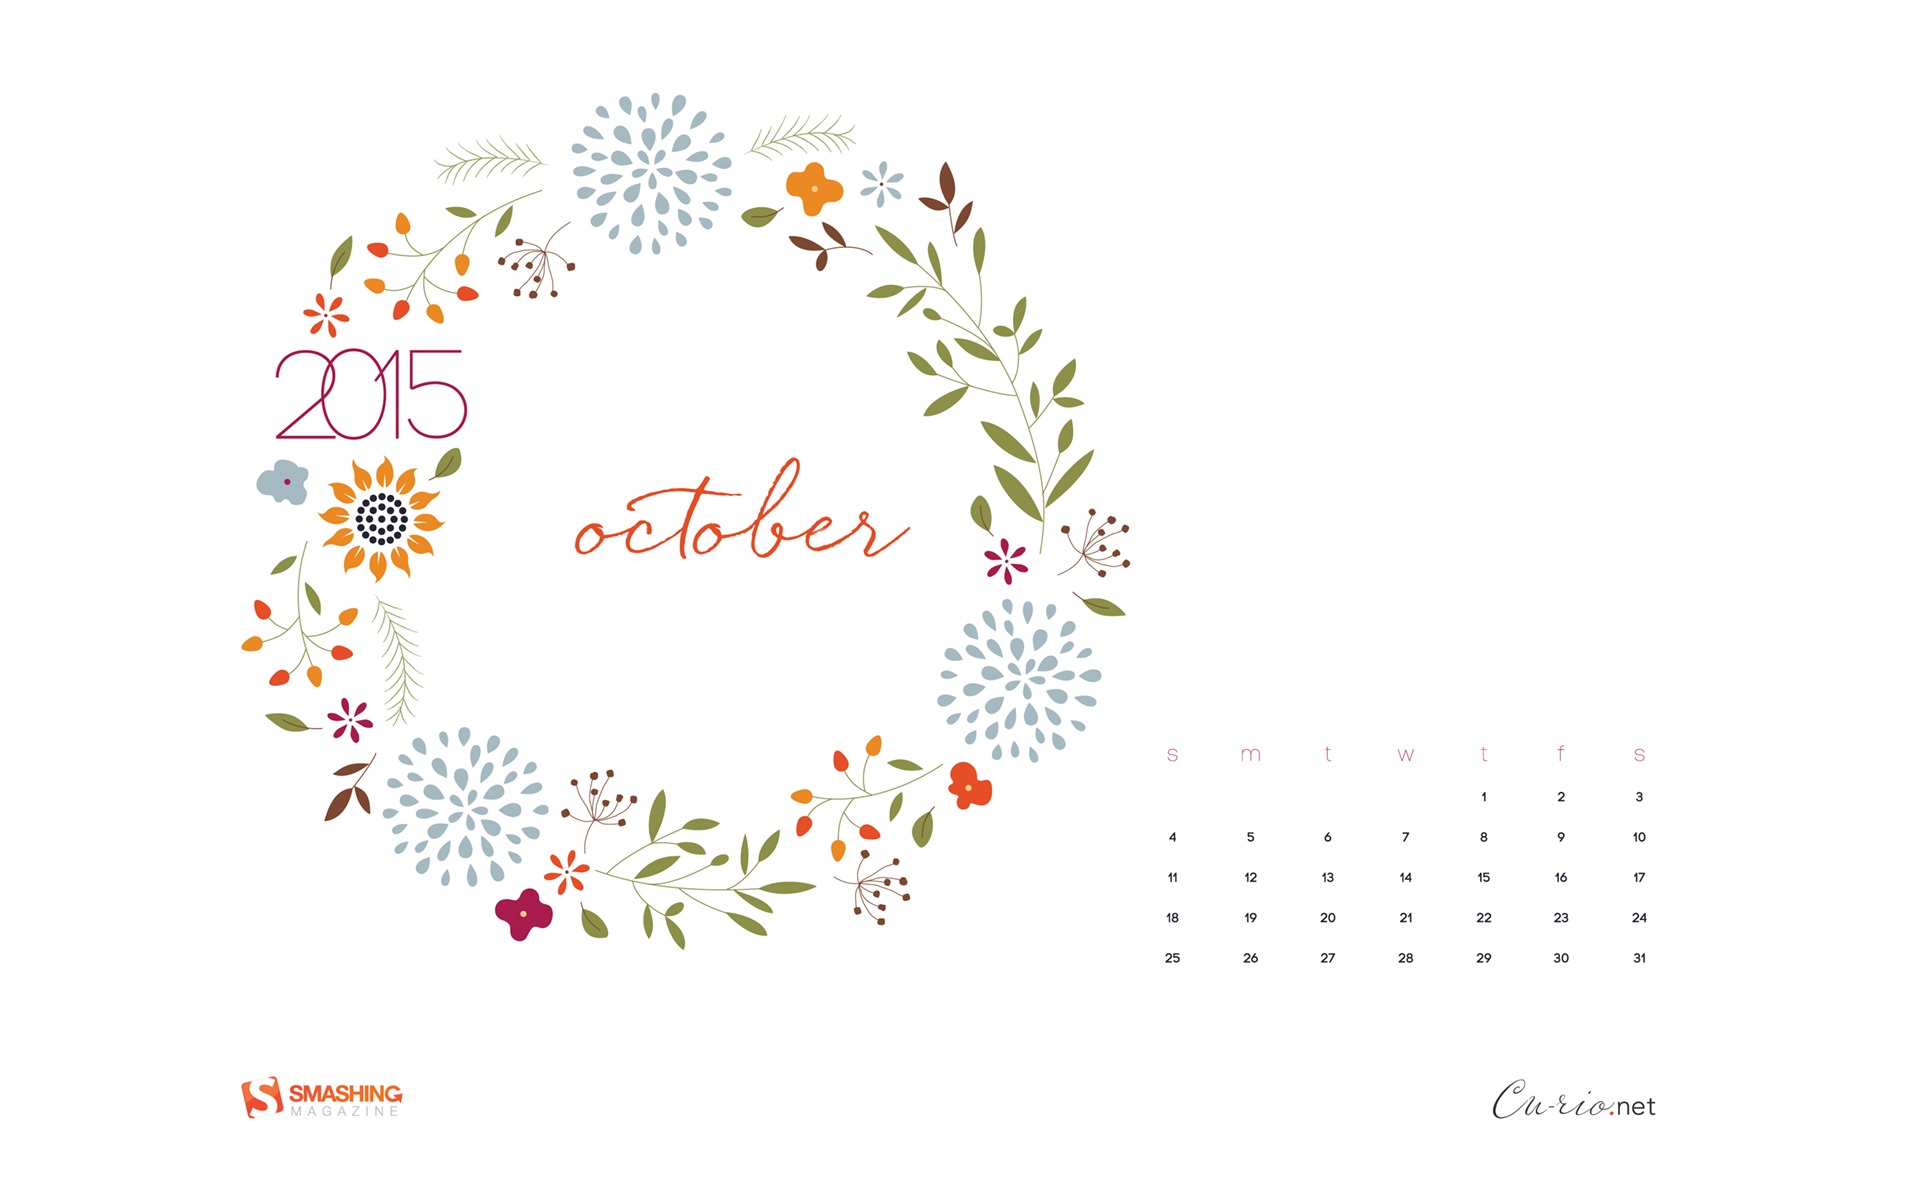 October 2015 calendar wallpaper (2) #11 - 1920x1200